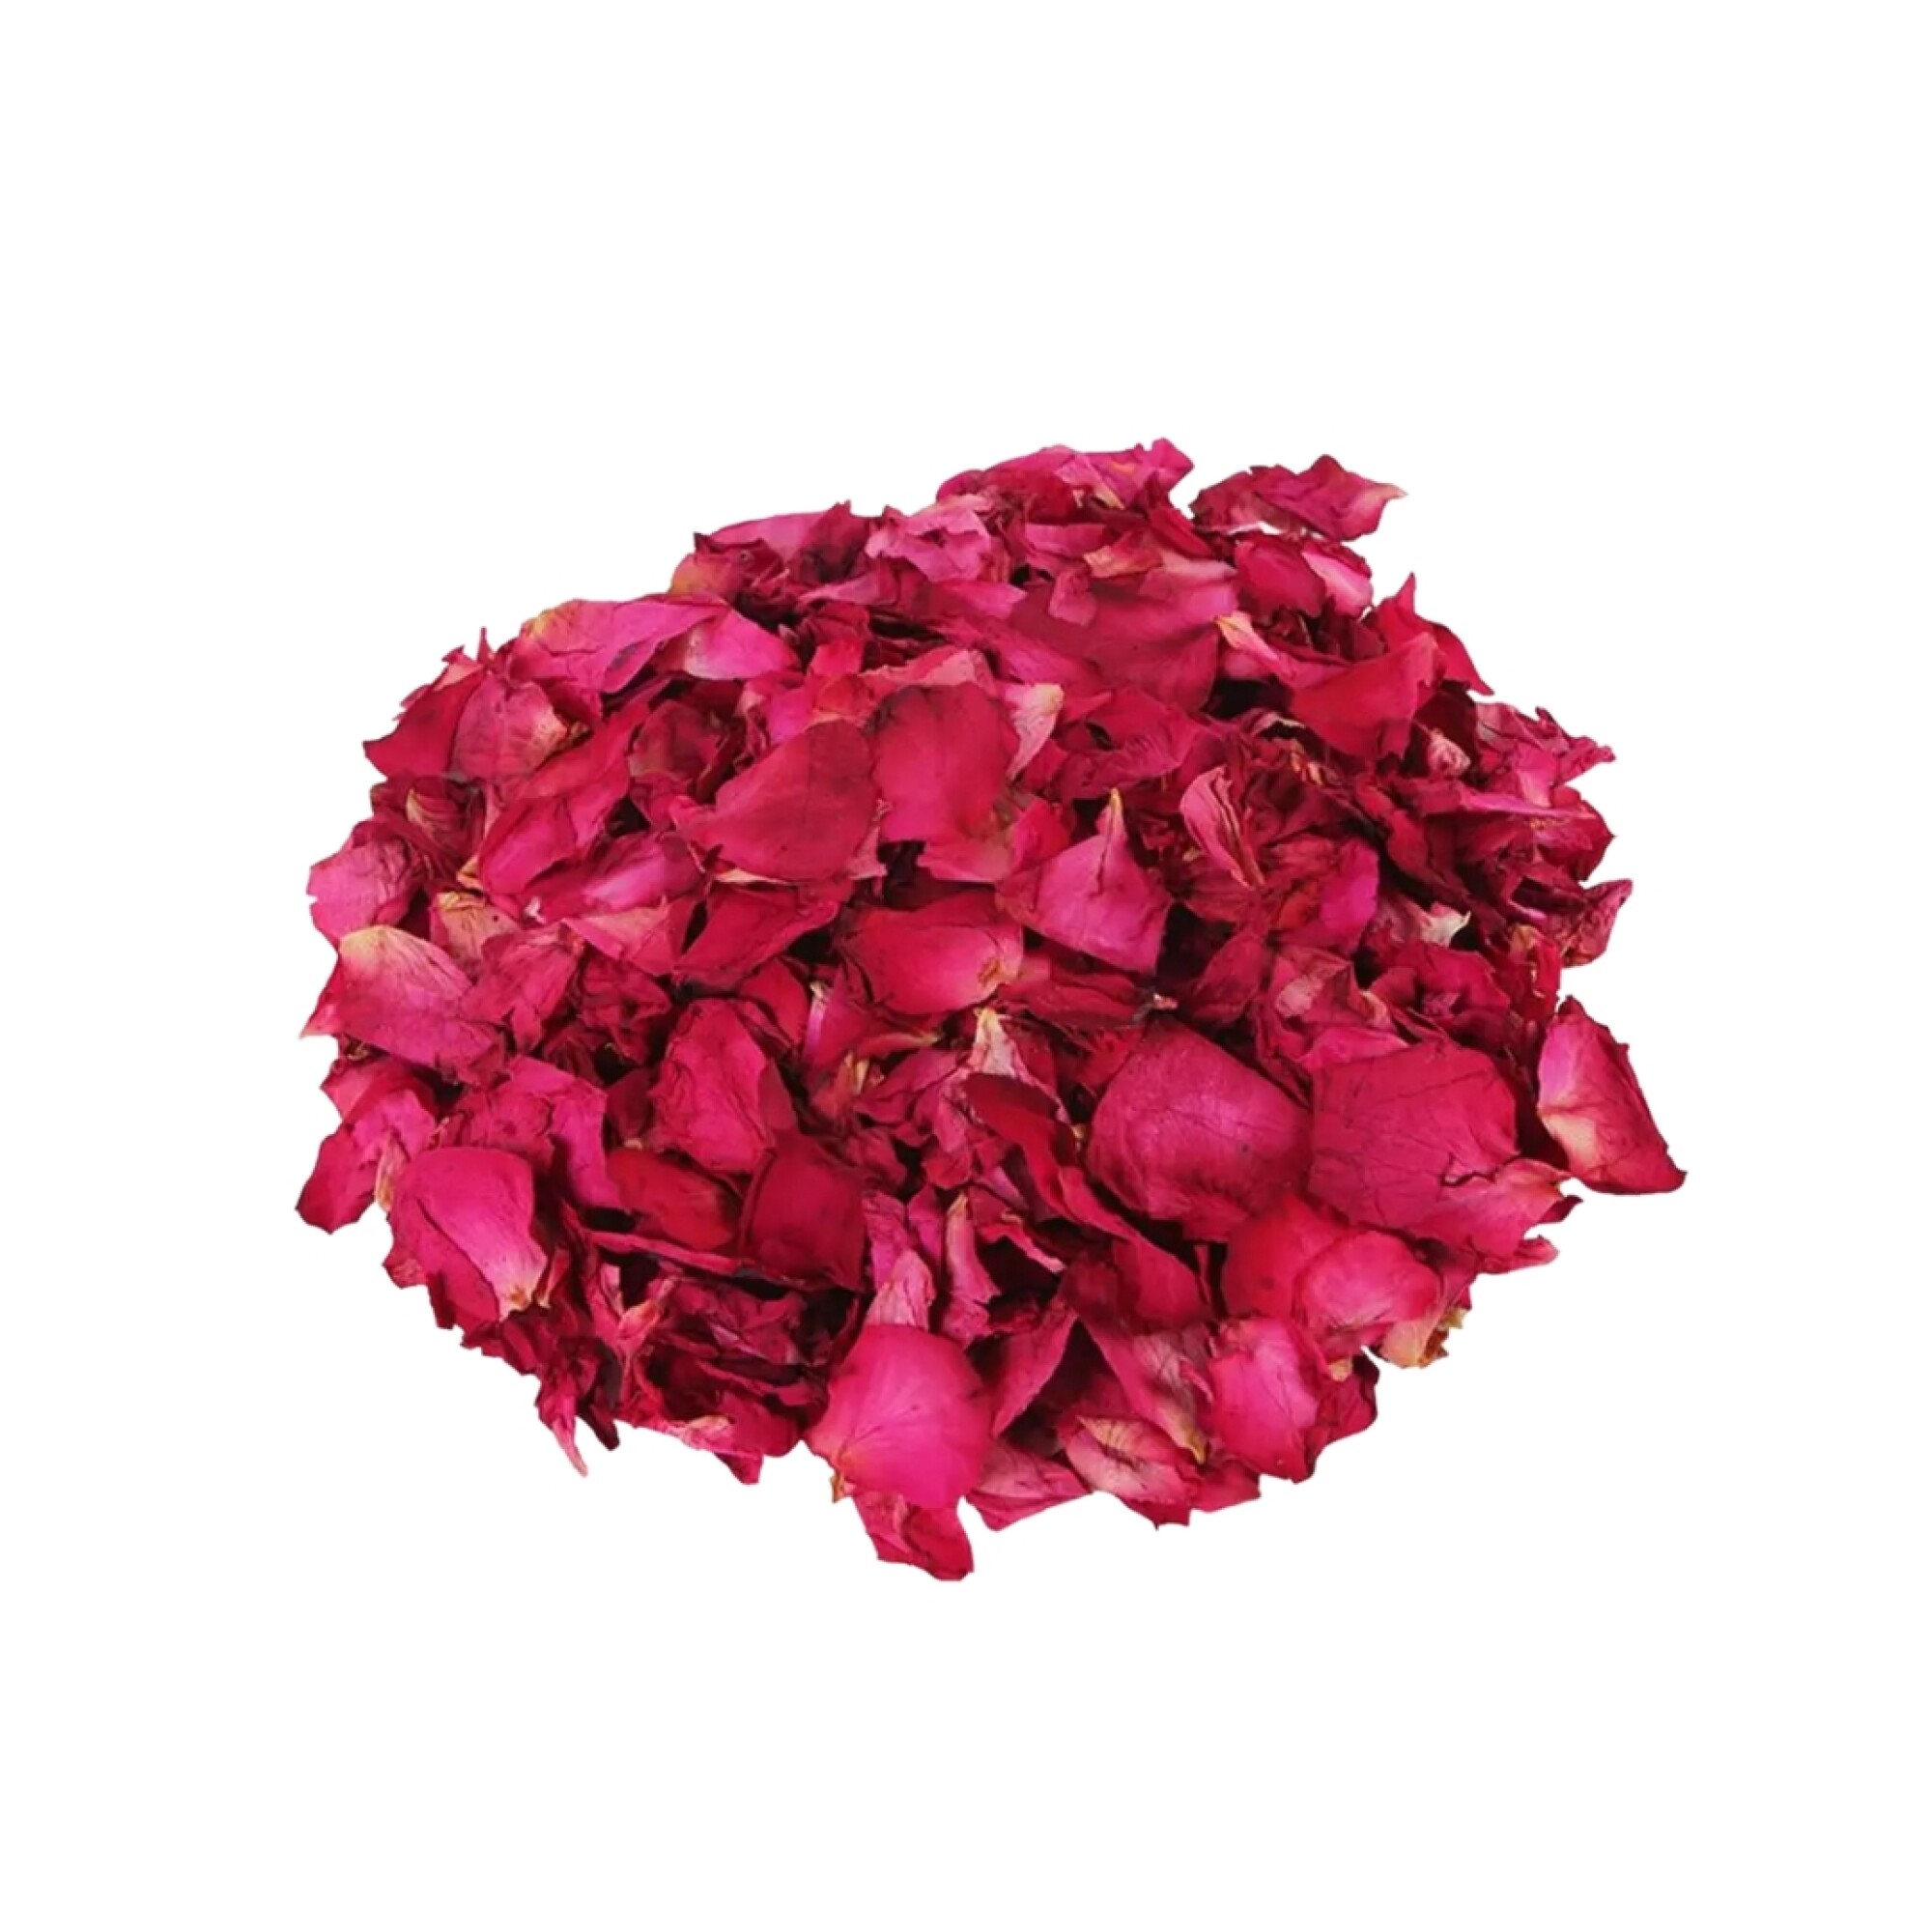 https://f.fcdn.app/imgs/606b8a/www.lamolienda.uy/moliuy/dbad/original/catalogo/003090_003090_1/2000-2000/petalos-de-rosa-25g-petalos-de-rosa-25g.jpg